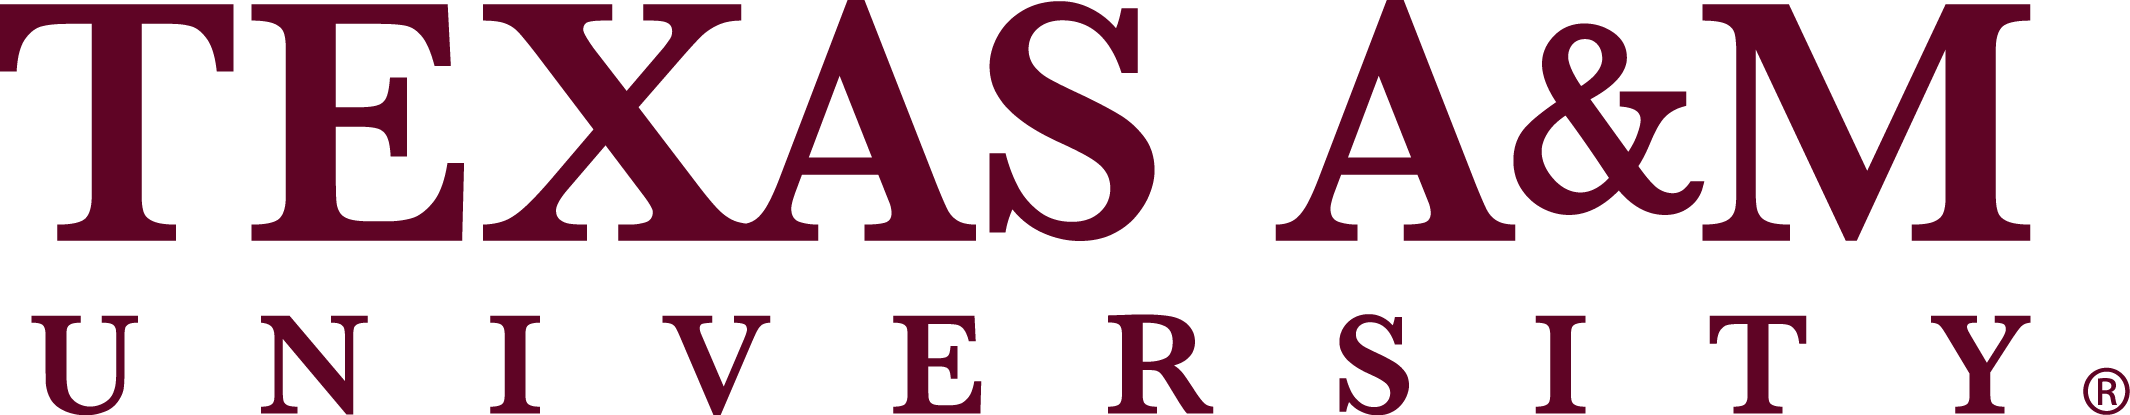 Tamu Texas A M University Logo - Texas A&m Qatar Logo (2130x415)